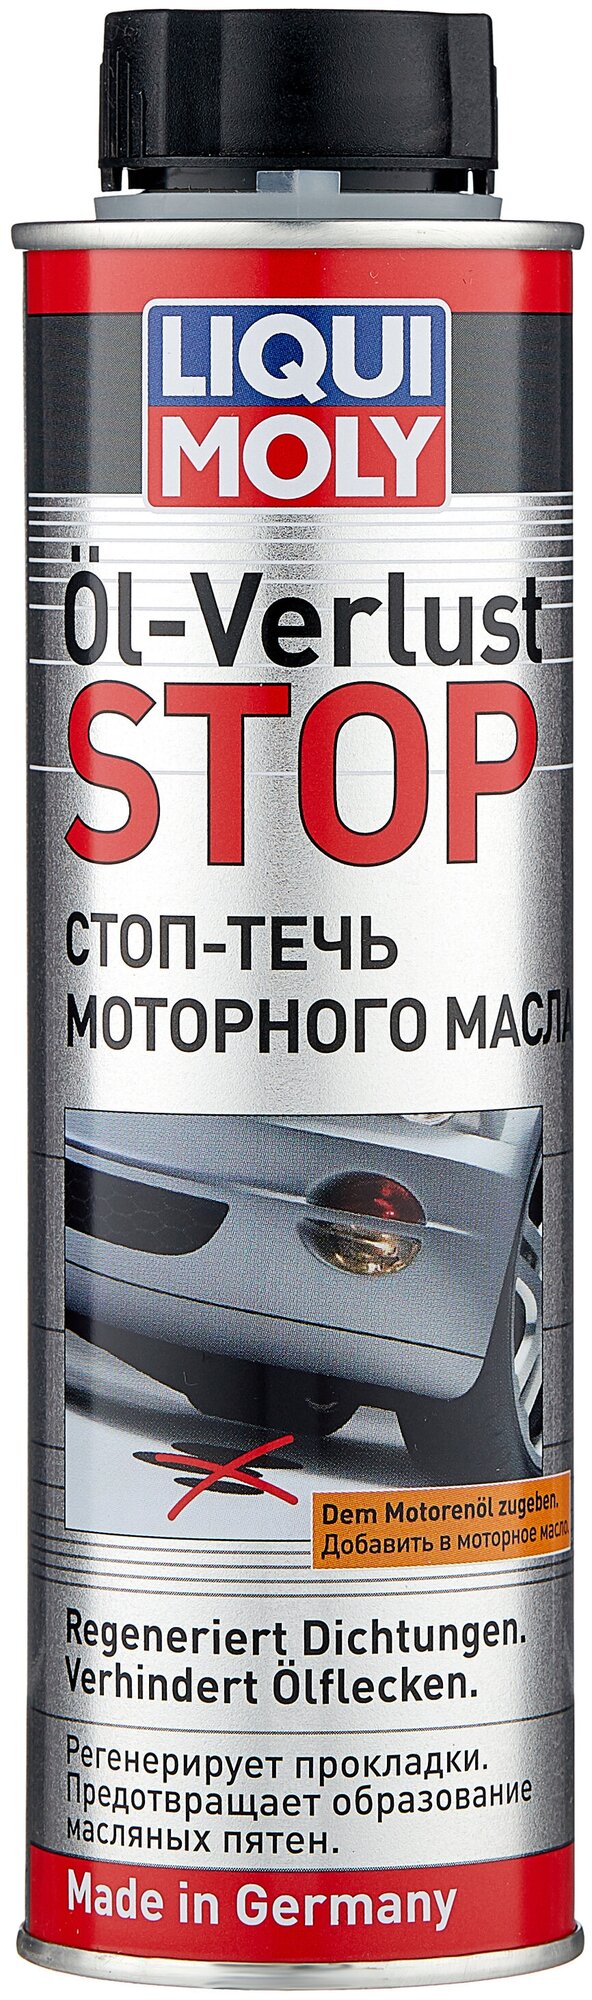 Liqui moly стоп-течь моторного масла oil-verlust-stop 0.3л. (1995)